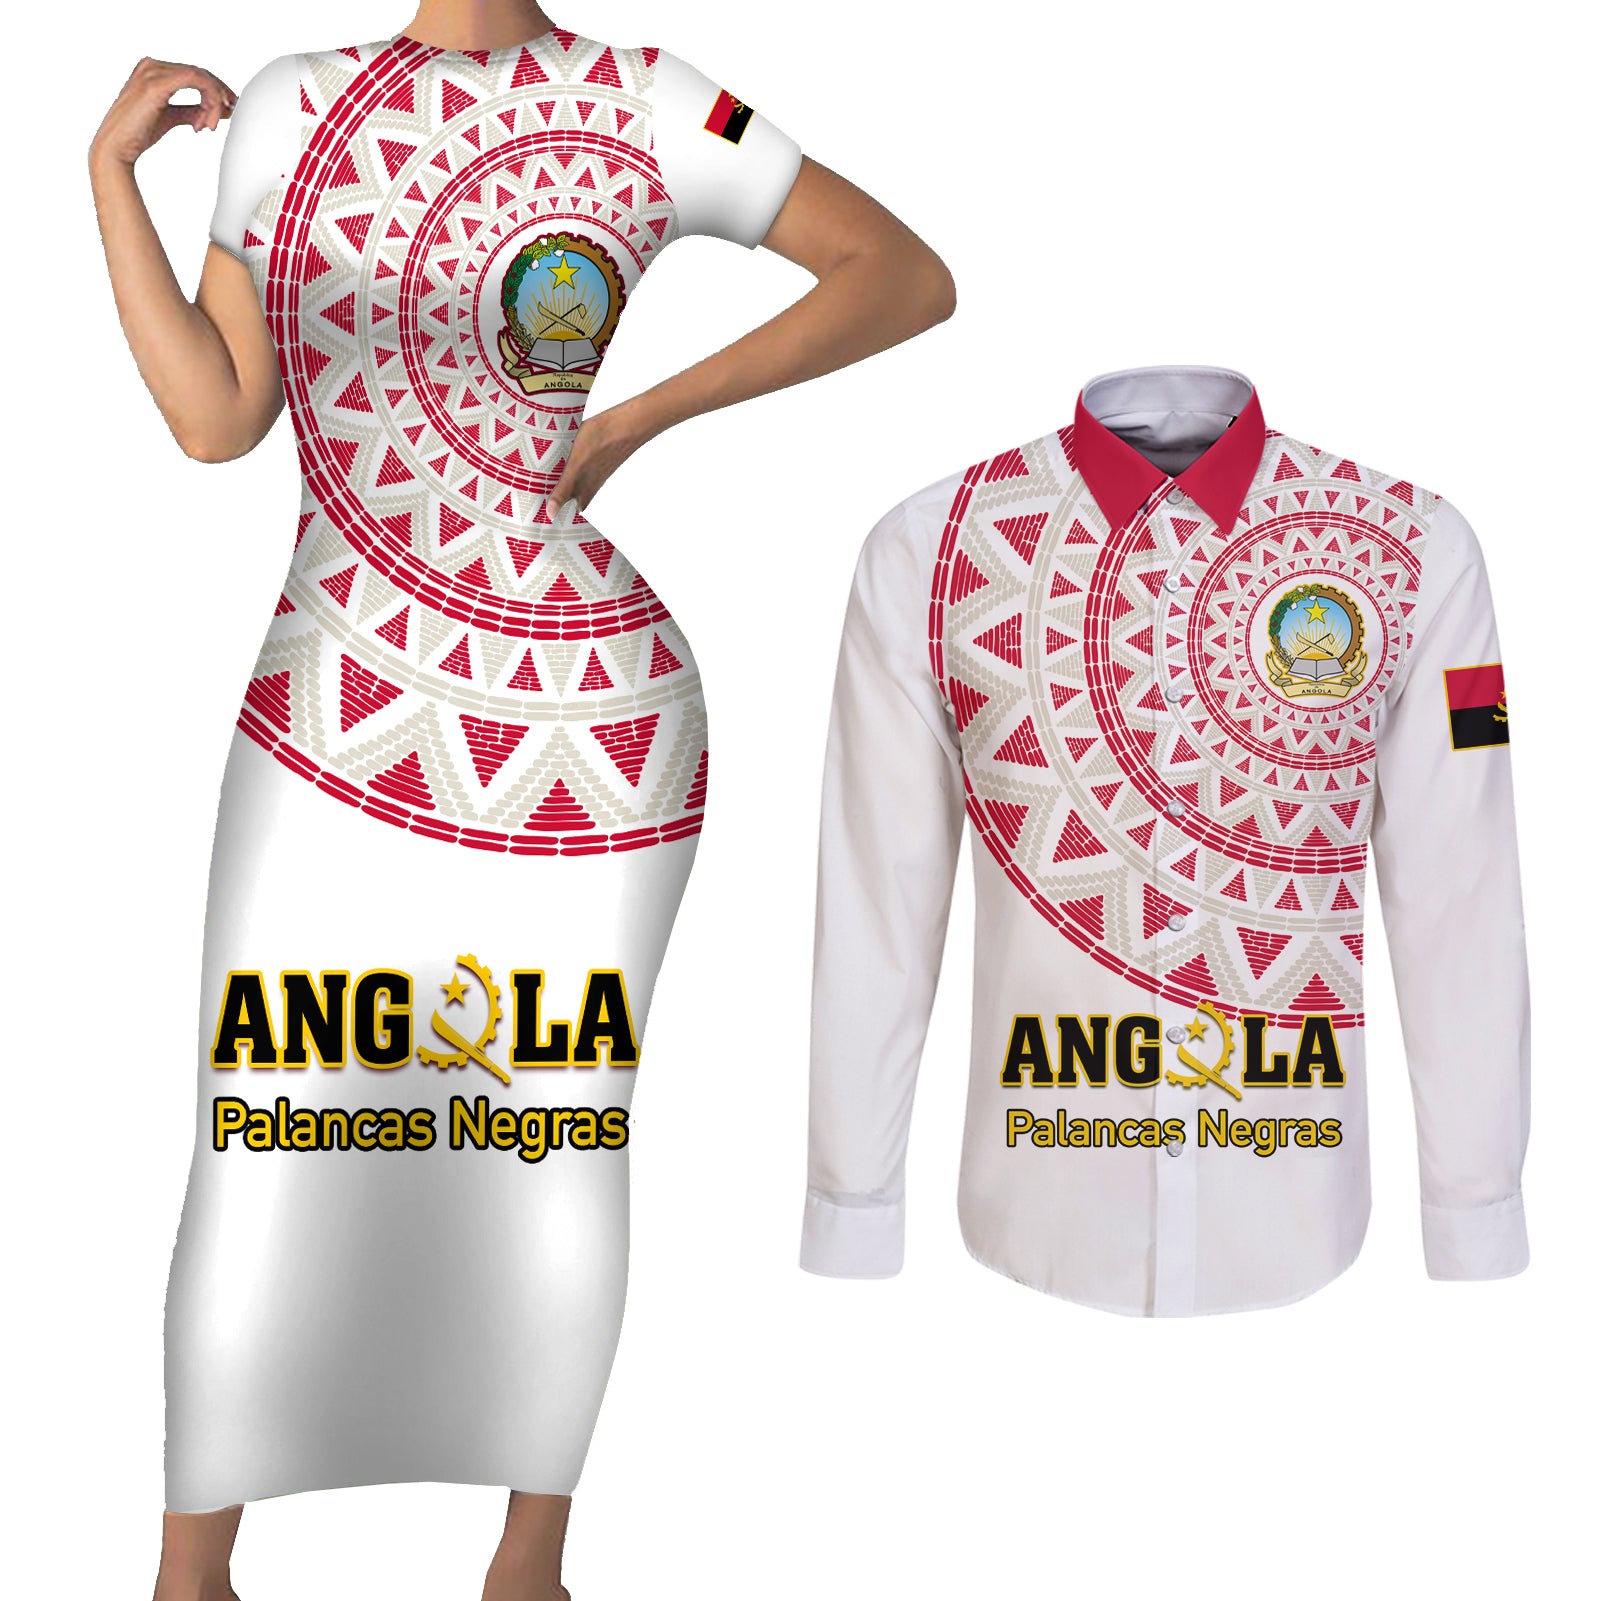 Angola Football Couples Matching Short Sleeve Bodycon Dress and Long Sleeve Button Shirt Go Palancas Negras White Version